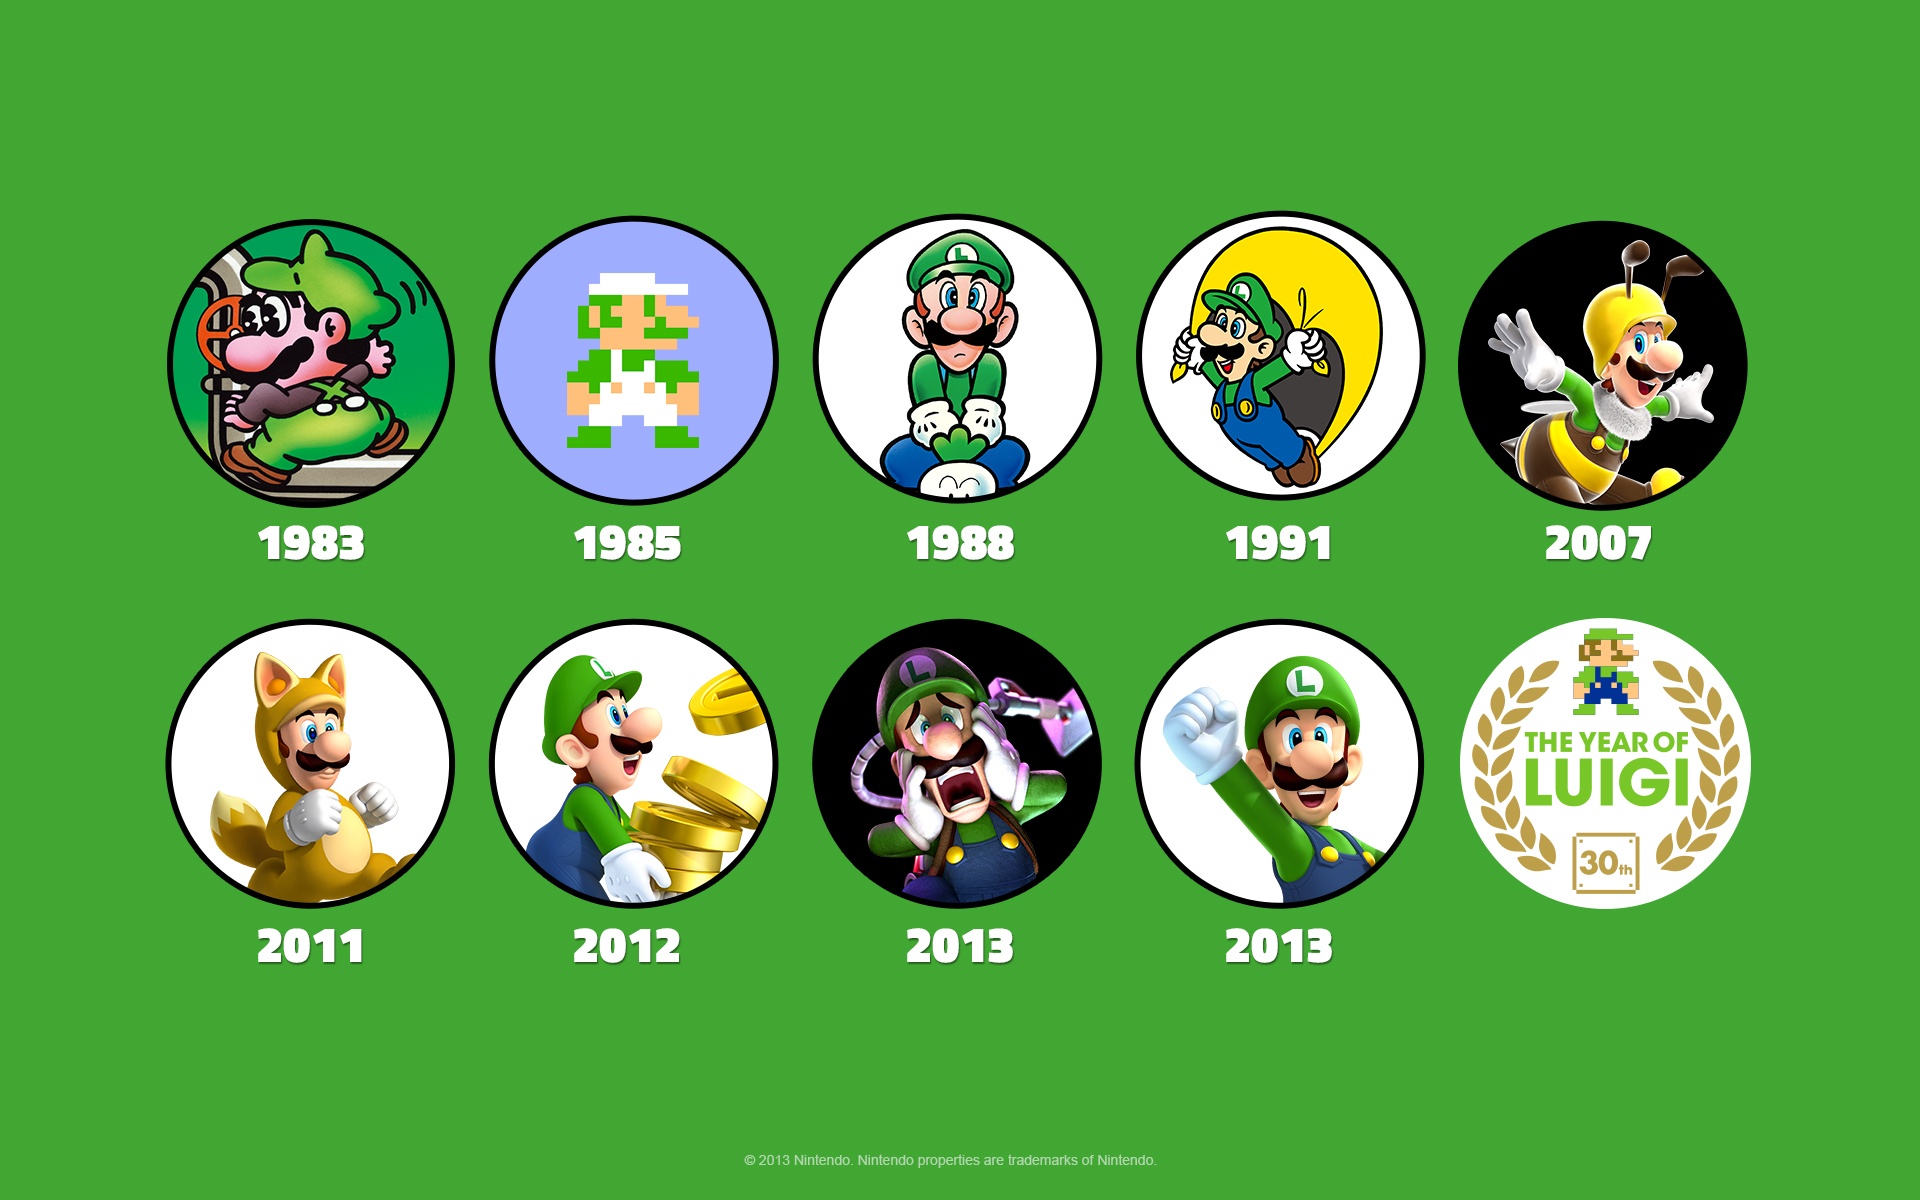 Nintendo President Satoru Iwata Said That The Year Of Luigi Will